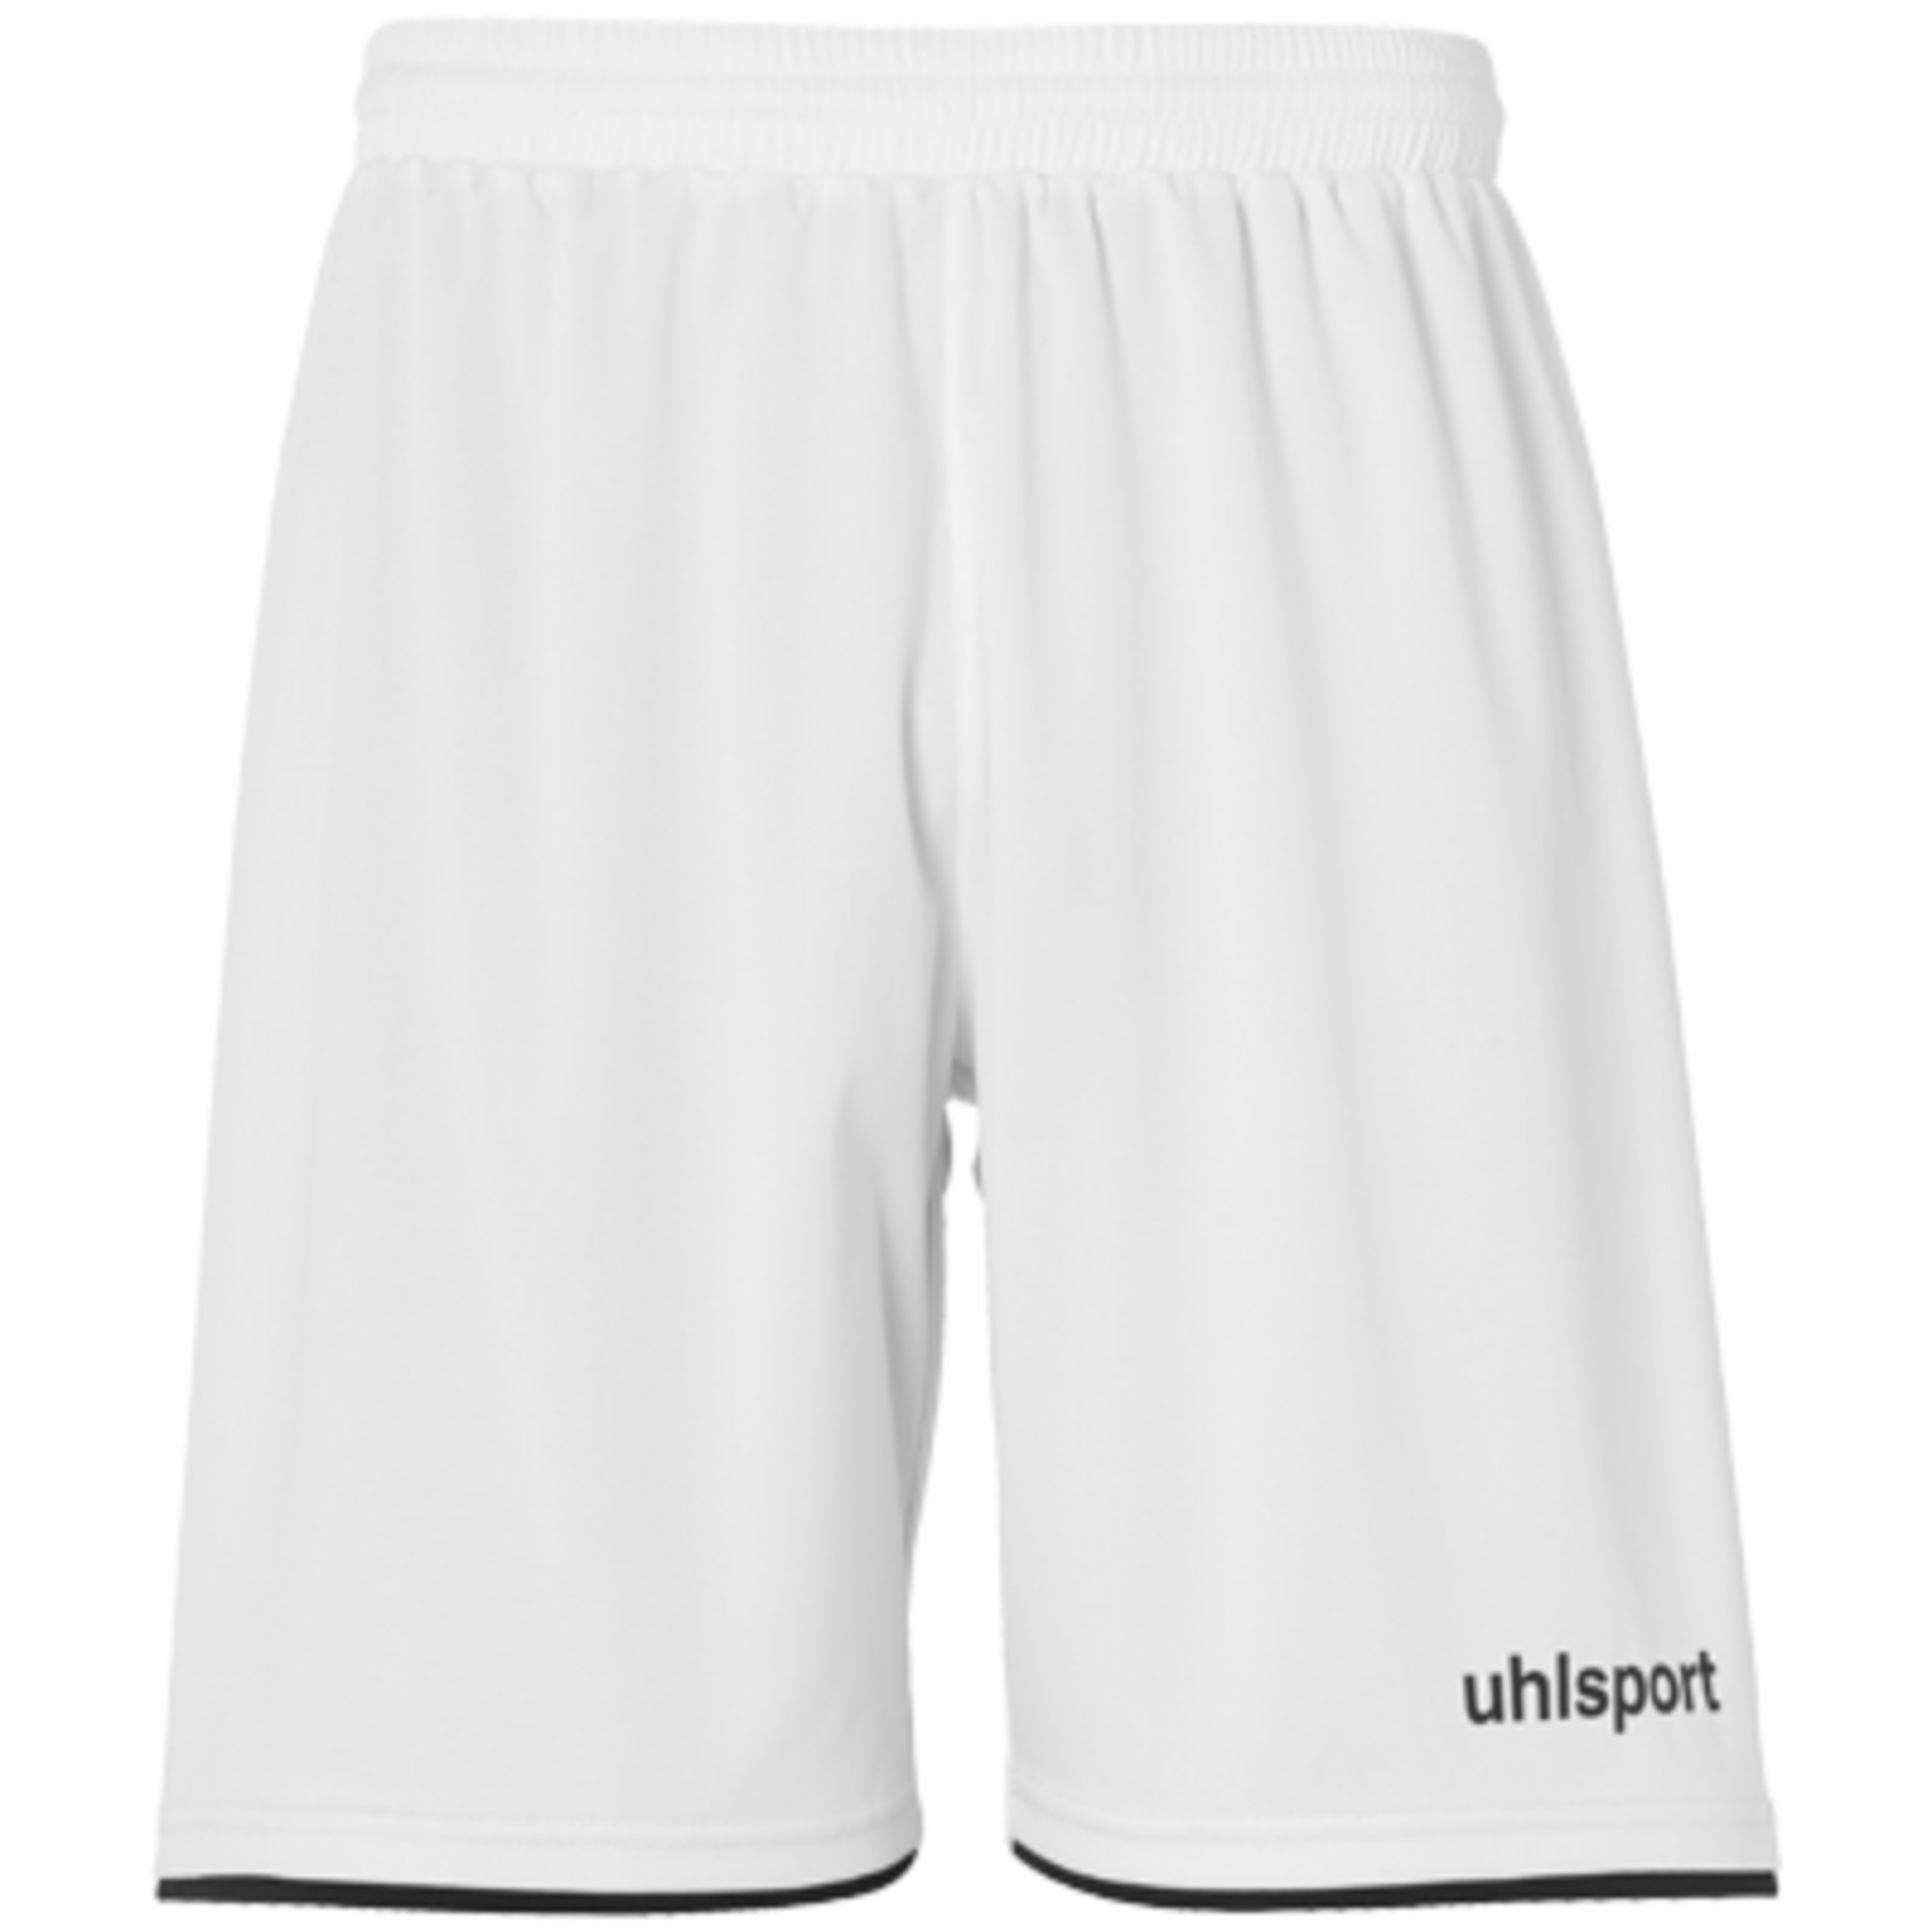 Club Shorts Blanco/negro Uhlsport